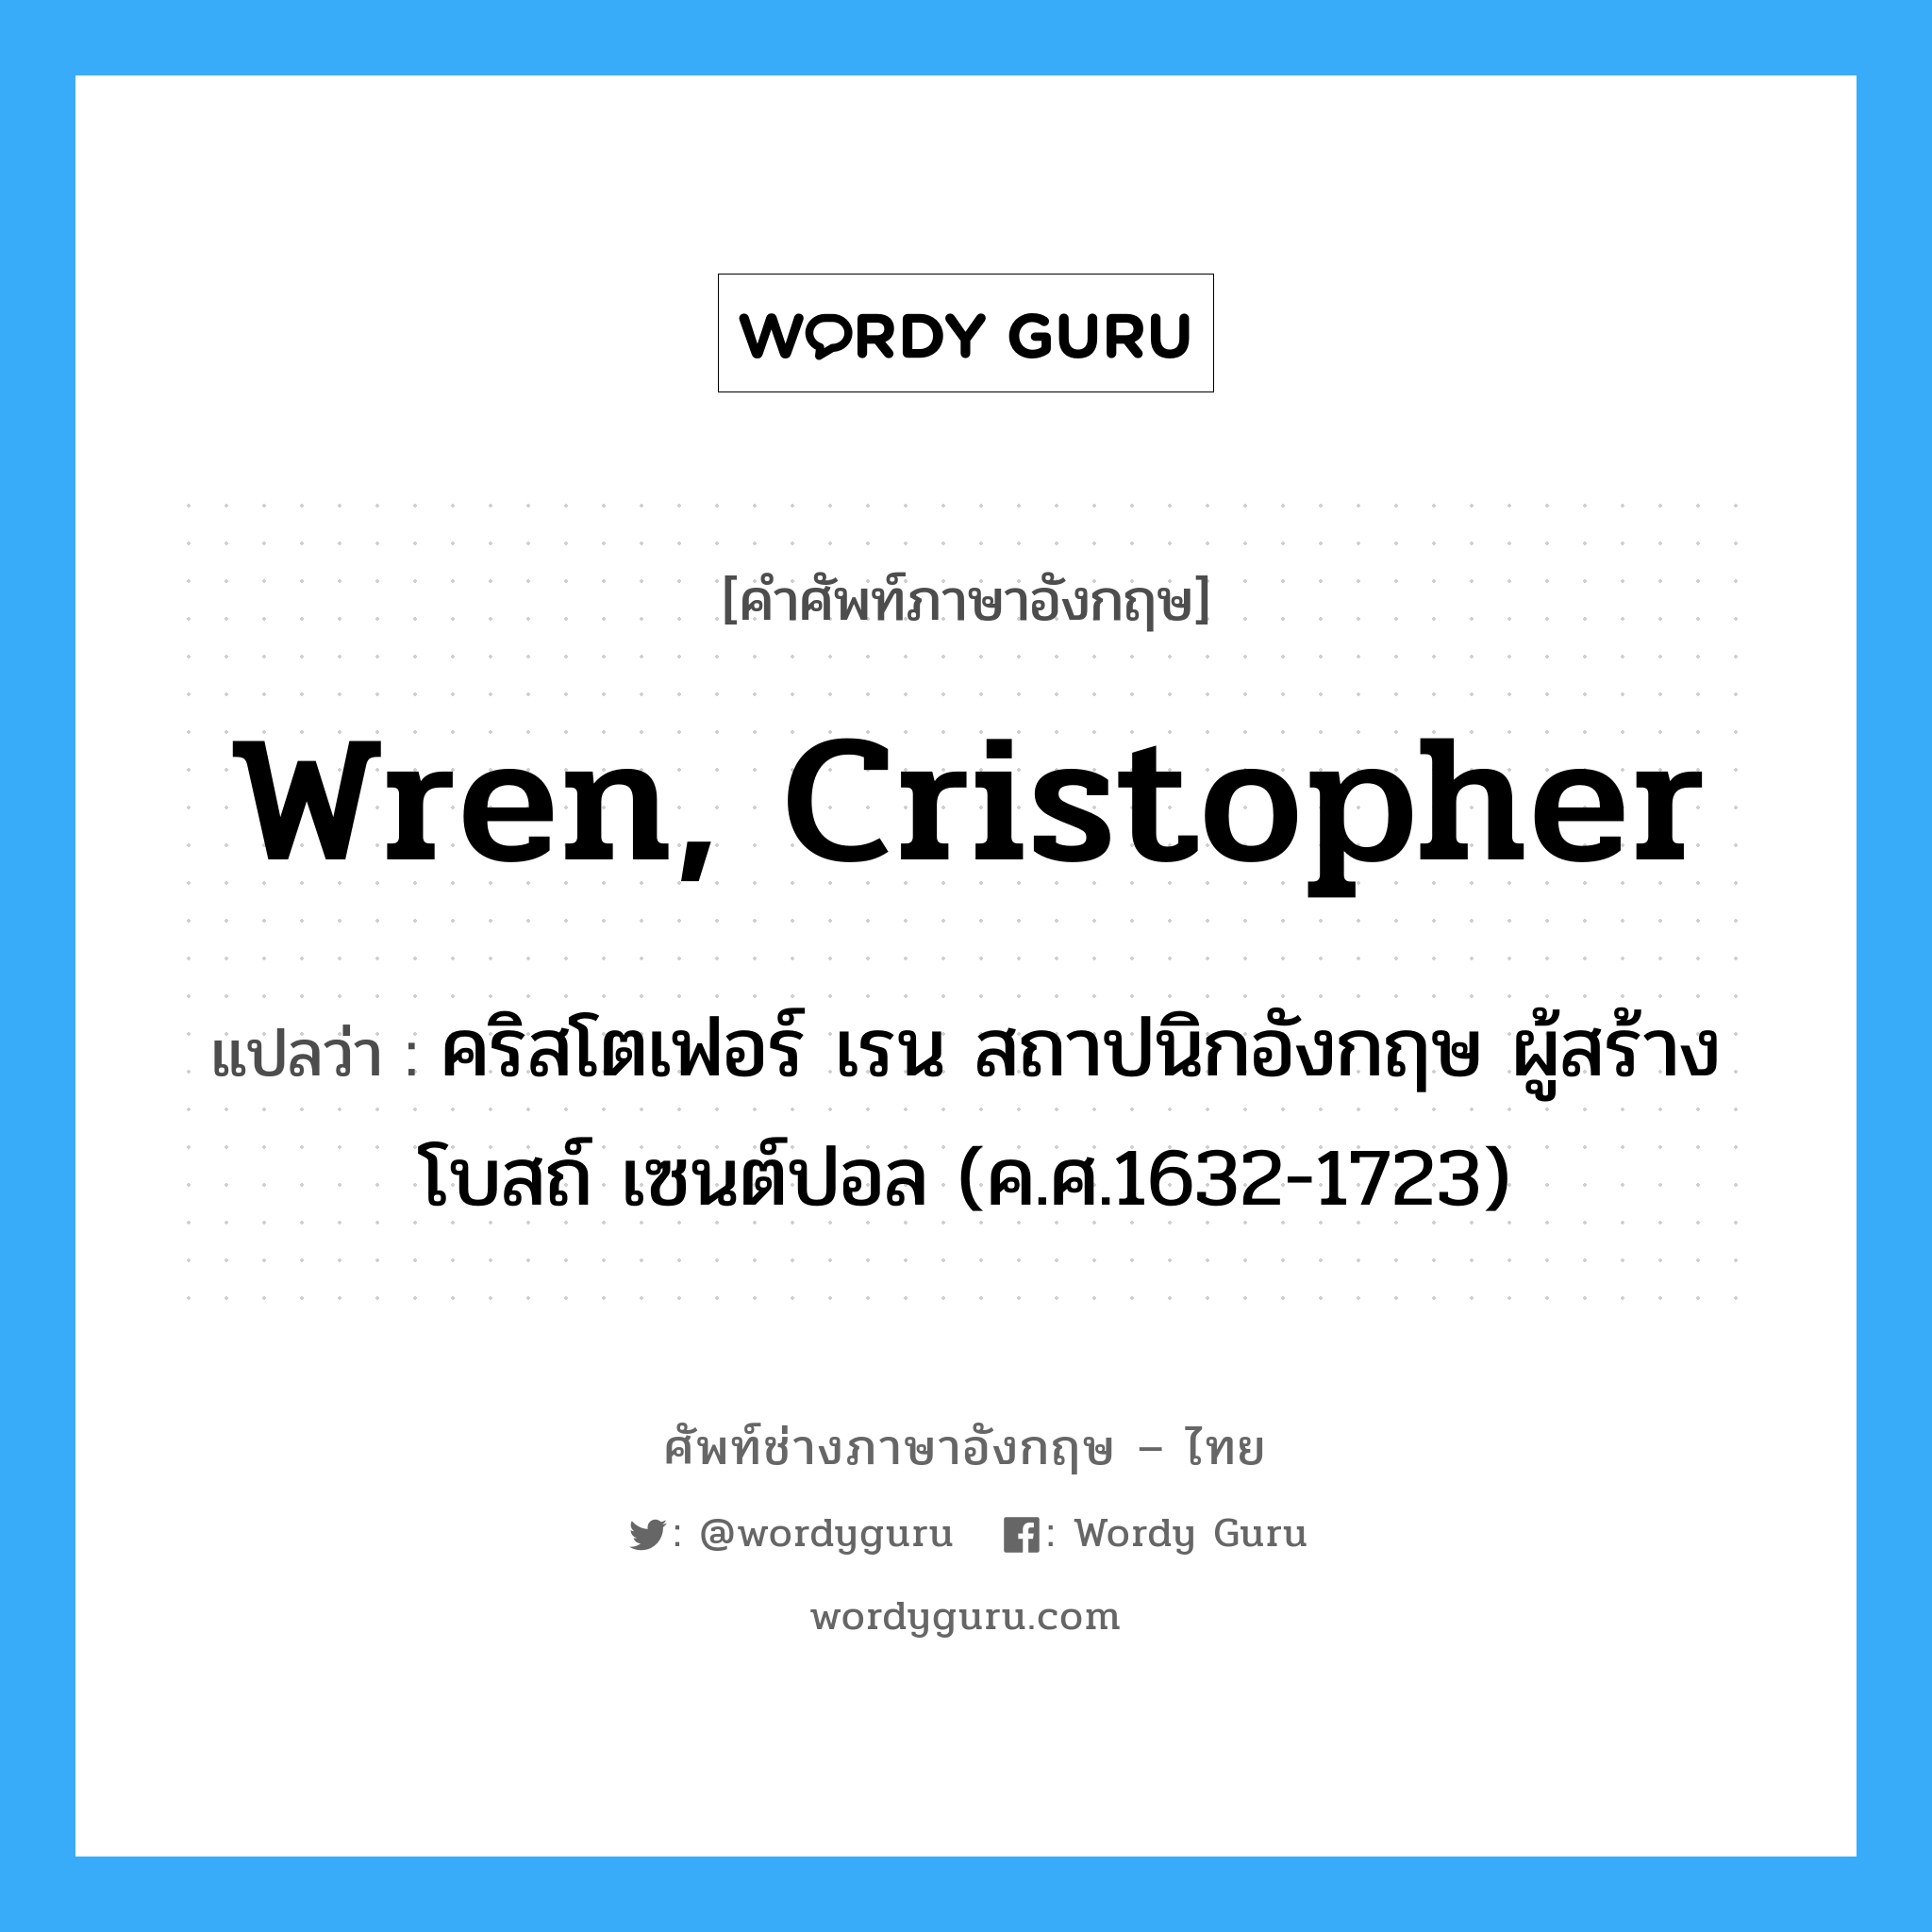 Wren, Cristopher แปลว่า?, คำศัพท์ช่างภาษาอังกฤษ - ไทย Wren, Cristopher คำศัพท์ภาษาอังกฤษ Wren, Cristopher แปลว่า คริสโตเฟอร์ เรน สถาปนิกอังกฤษ ผู้สร้างโบสถ์ เซนต์ปอล (ค.ศ.1632-1723)